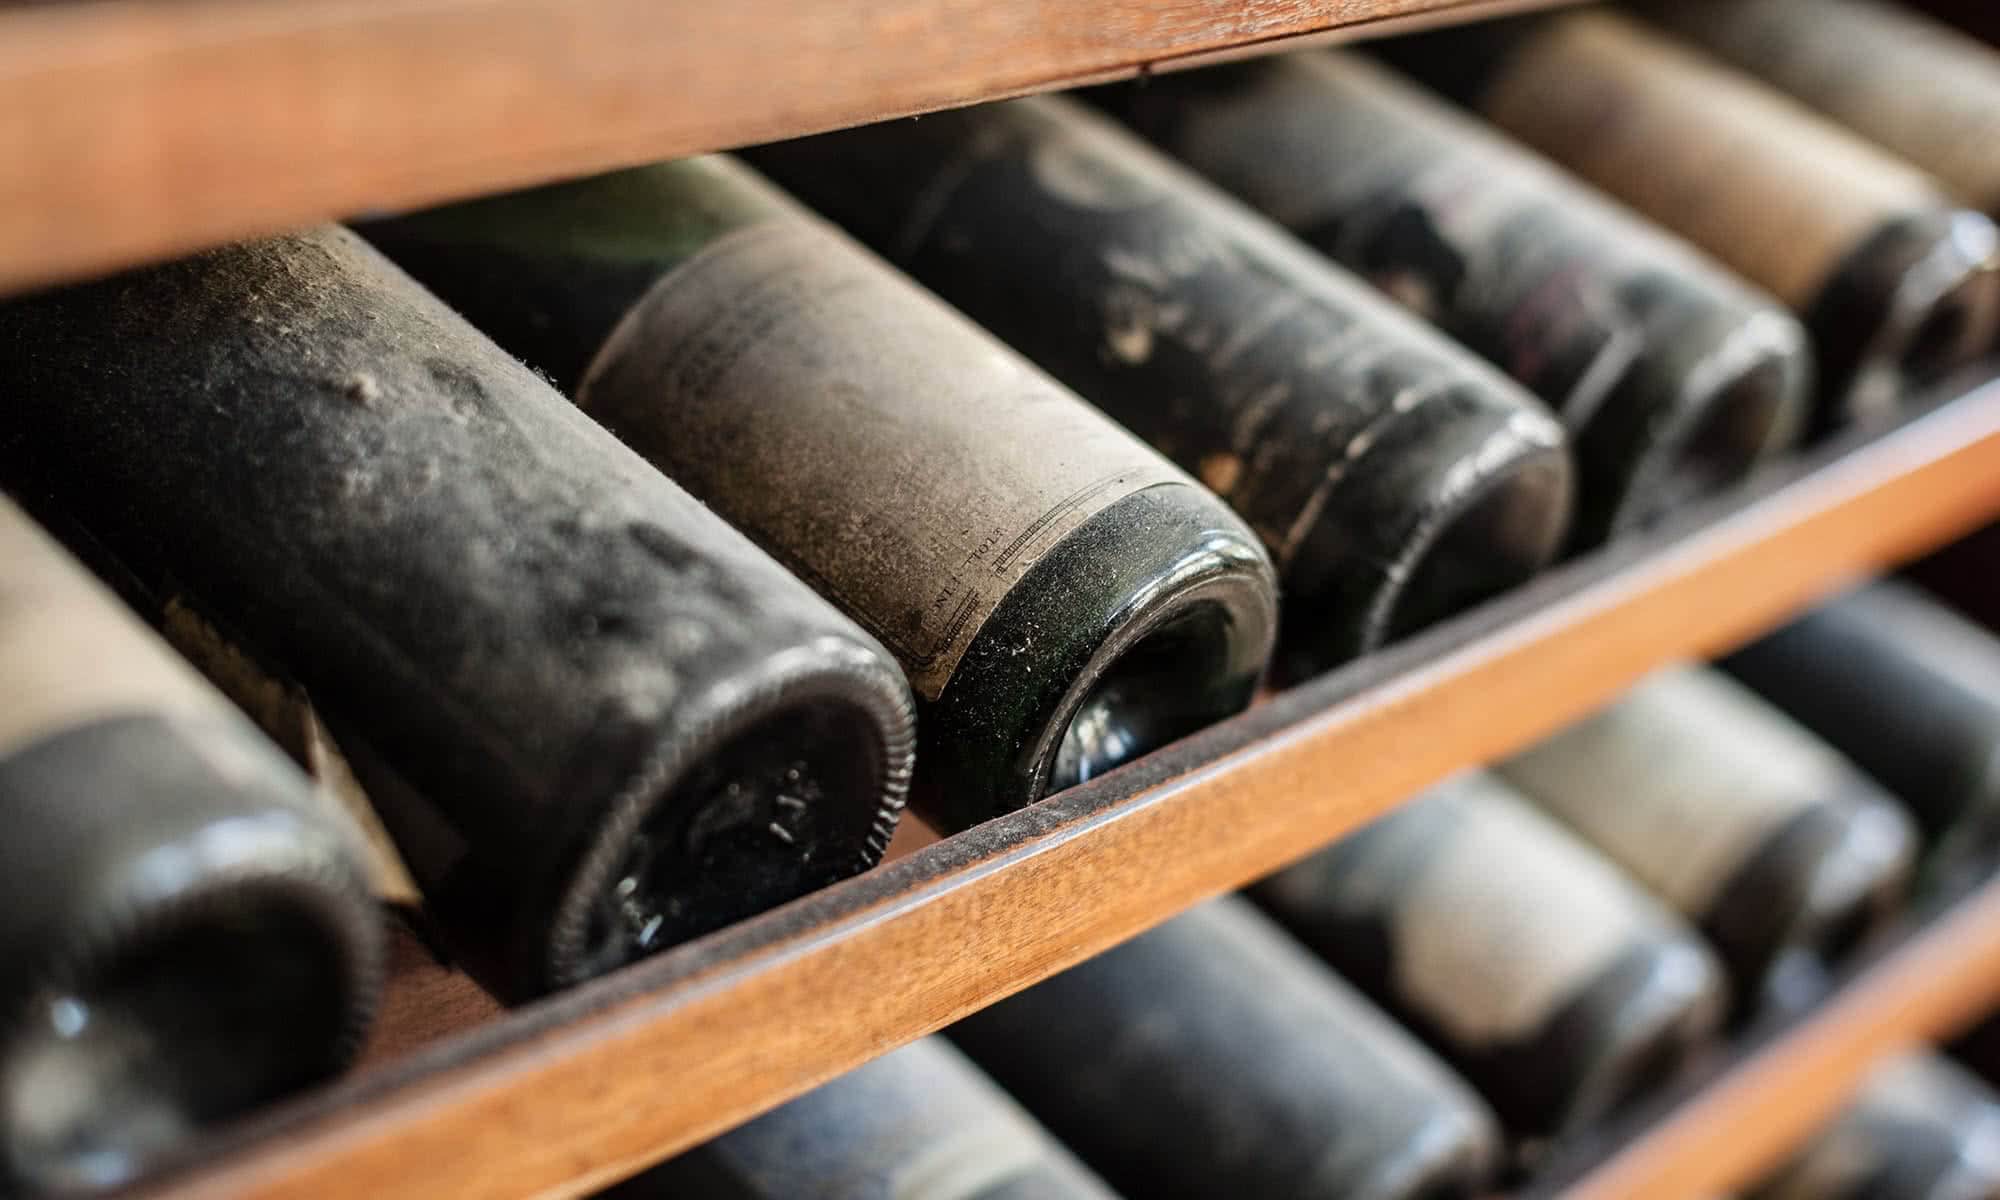 Store wine bottles horizontally or vertically